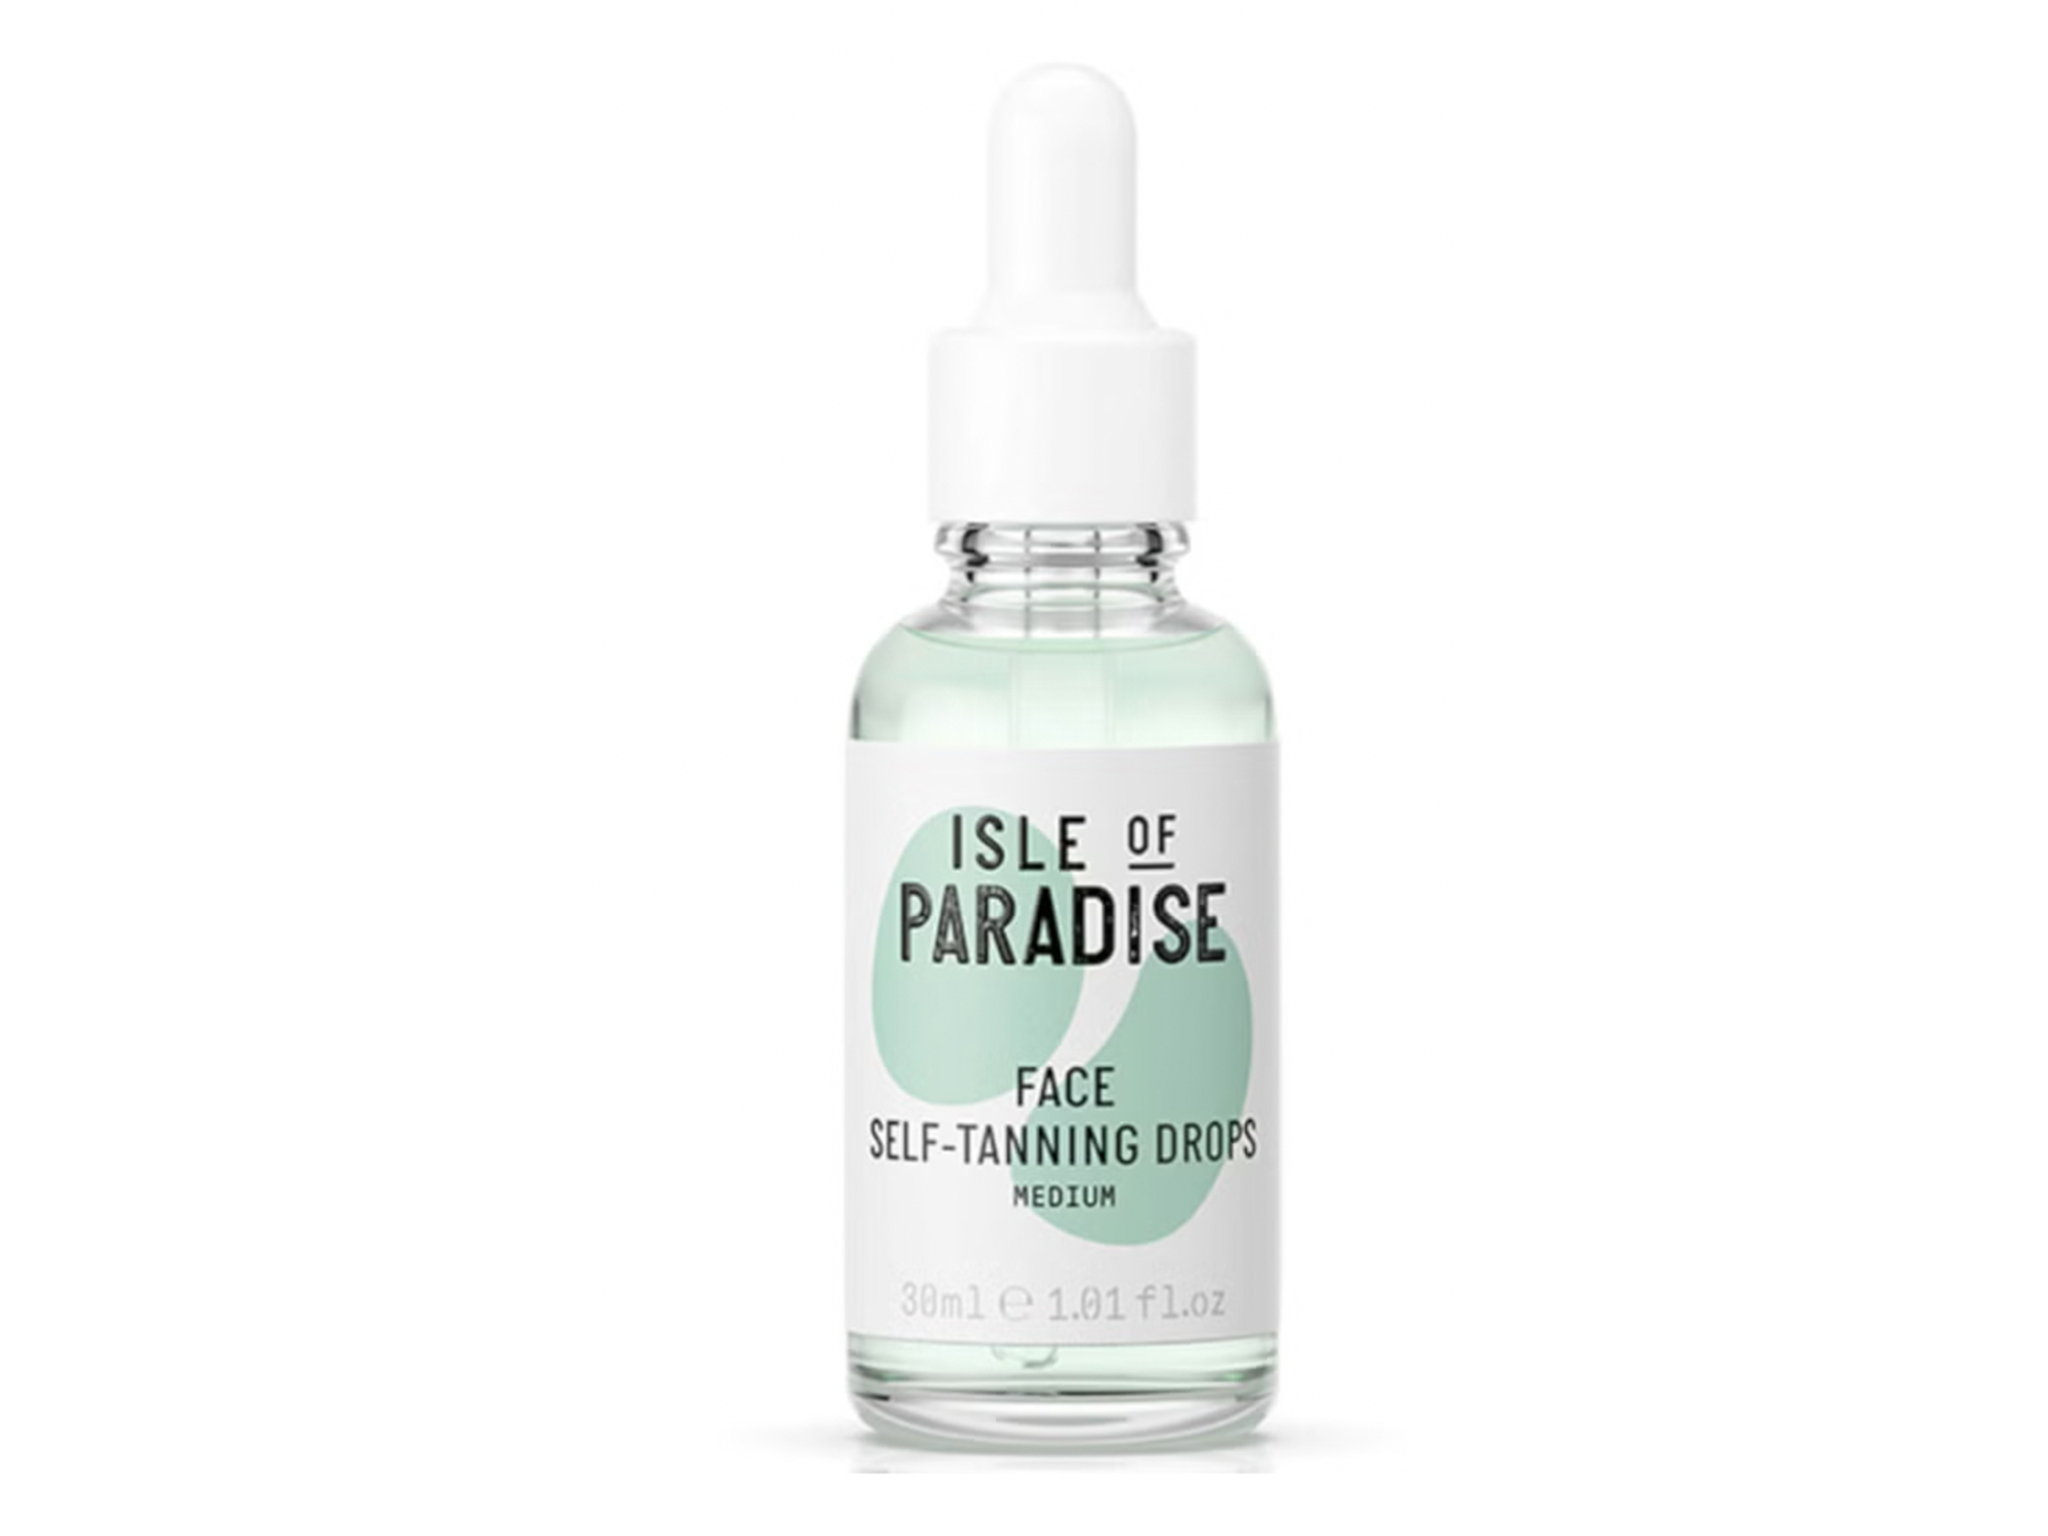 Isle of Paradise self-tanning drops